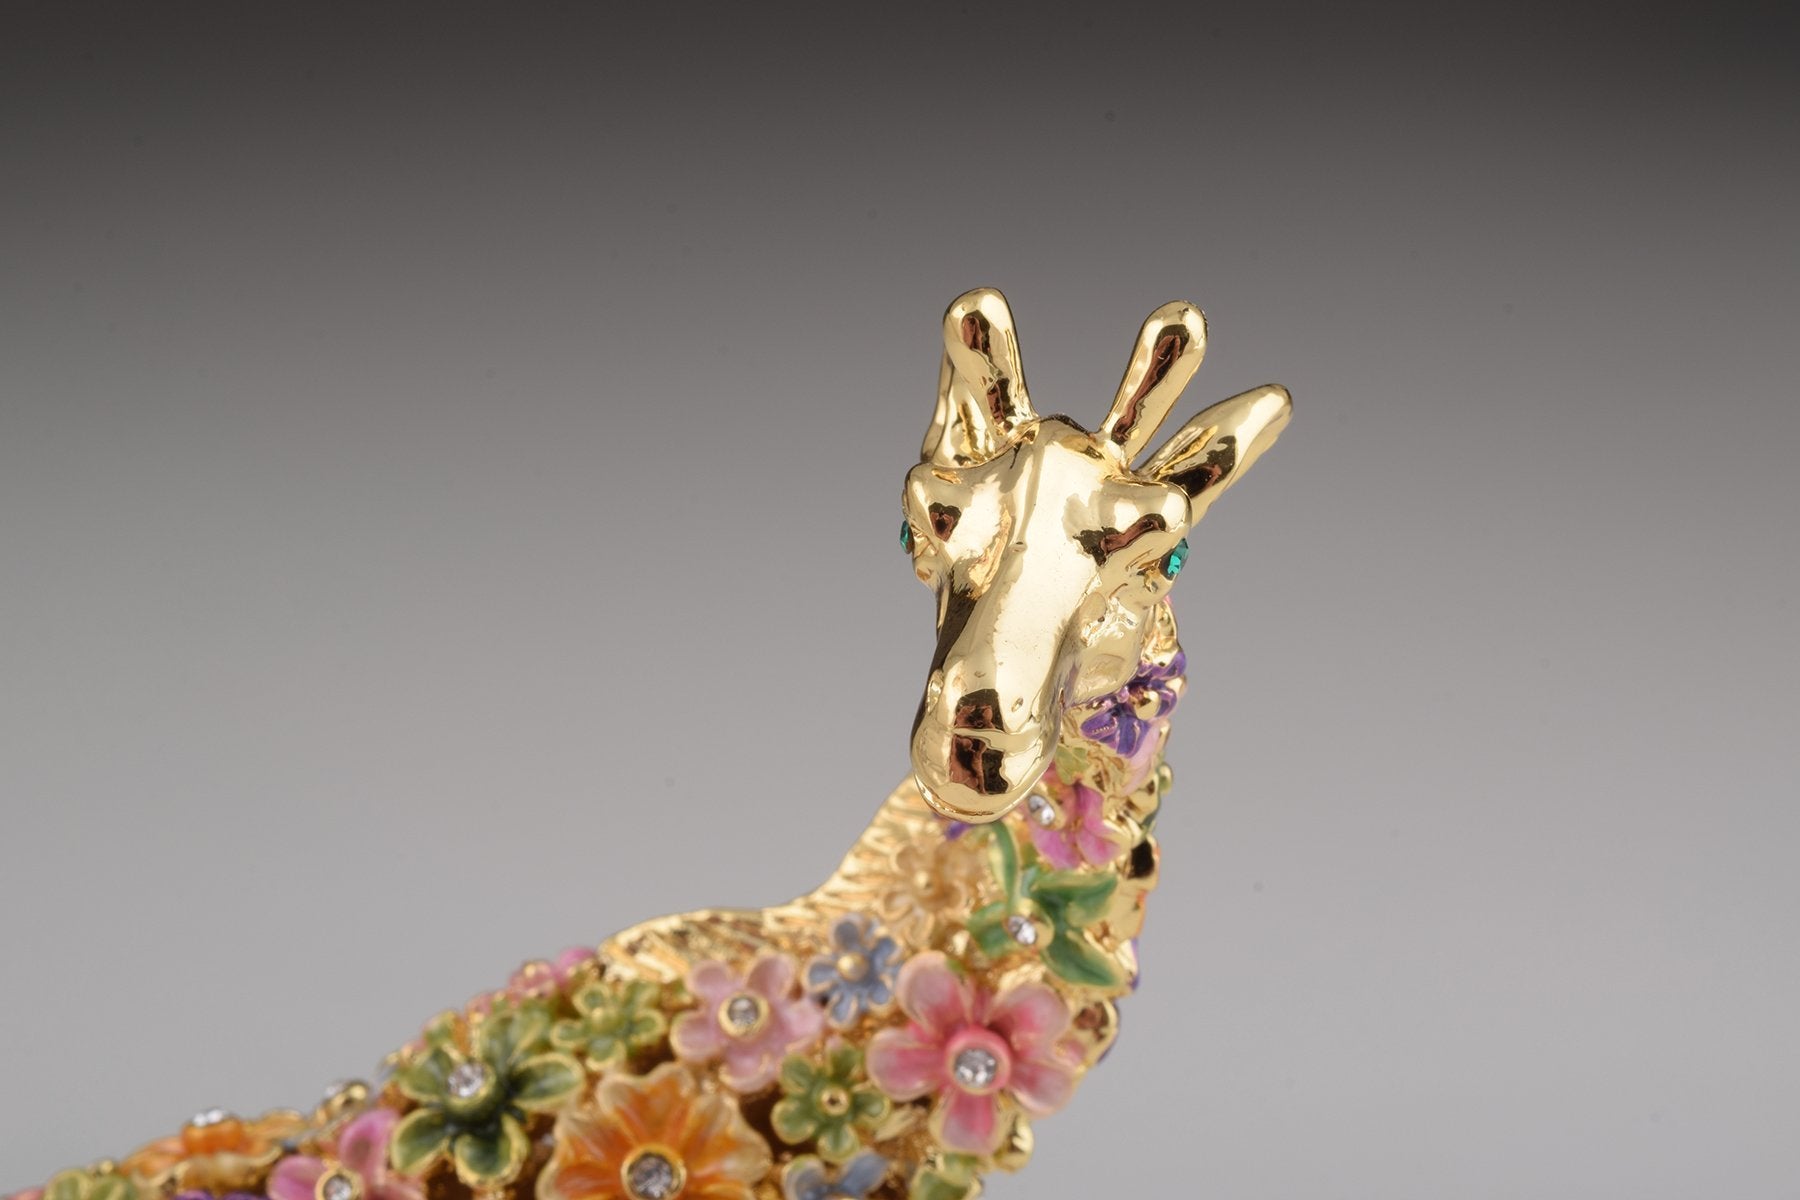 Keren Kopal Gold Giraffe with Colorful Flowers Trinket Box  104.00